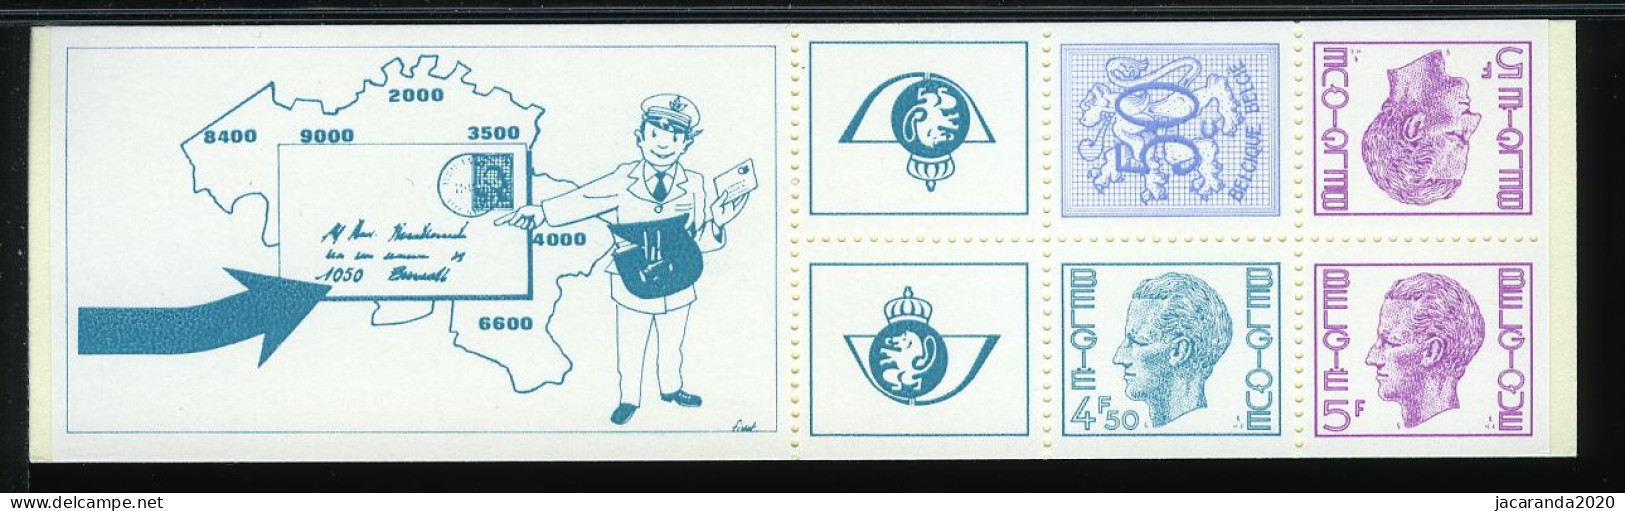 België B12 - Koning Boudewijn - Cijfer Op Heraldieke Leeuw - Roi Baudouin - Chiffre Sur Lion Héraldique - 1975 - 1953-2006 Moderne [B]